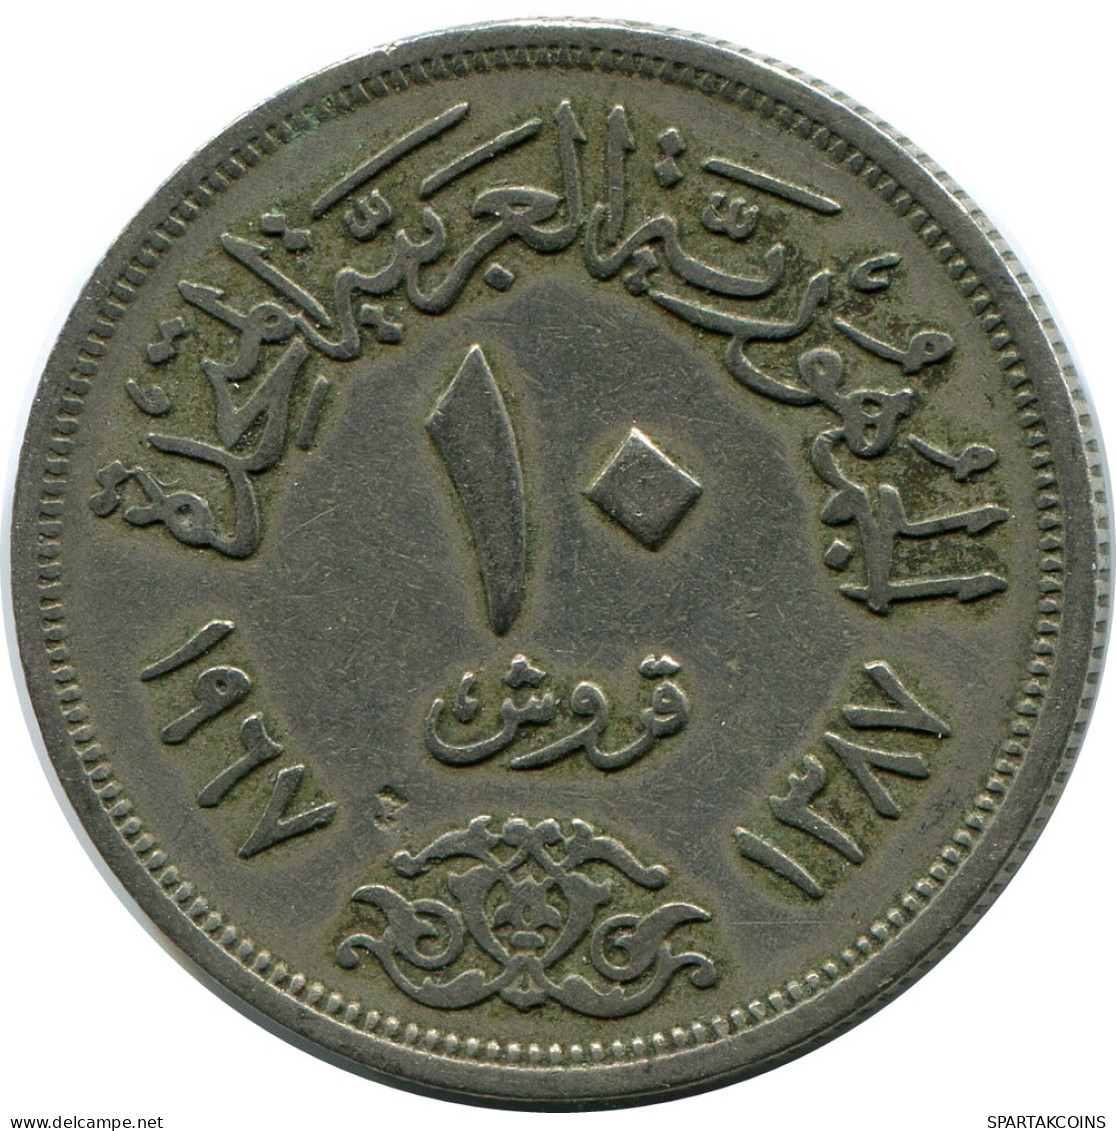 10 QIRSH 1967 EGYPT Islamic Coin #AH654.3.U - Egypt